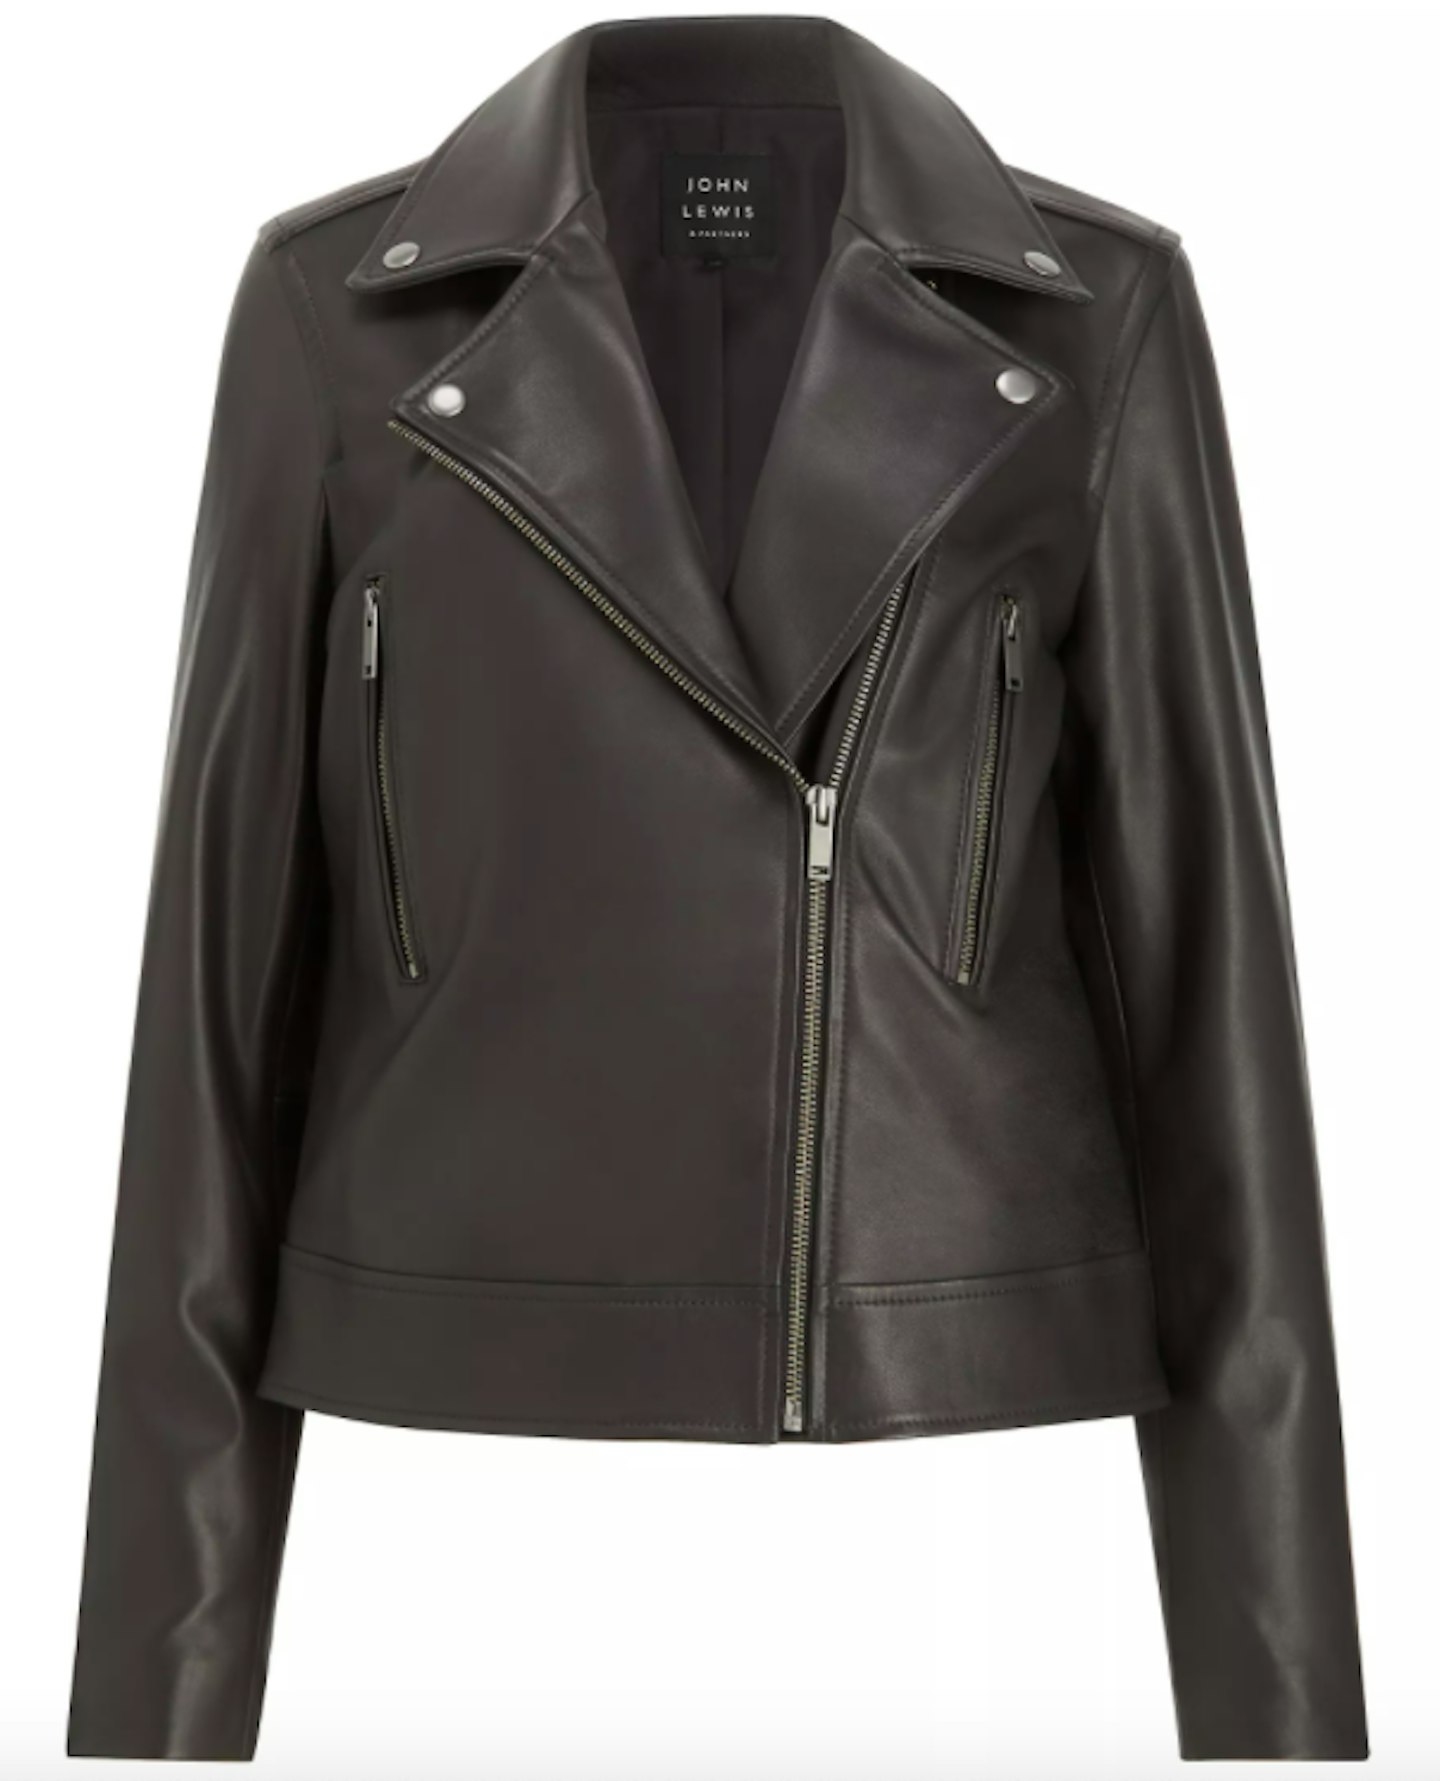 John Lewis & Partners, Leather Biker Jacket, £149